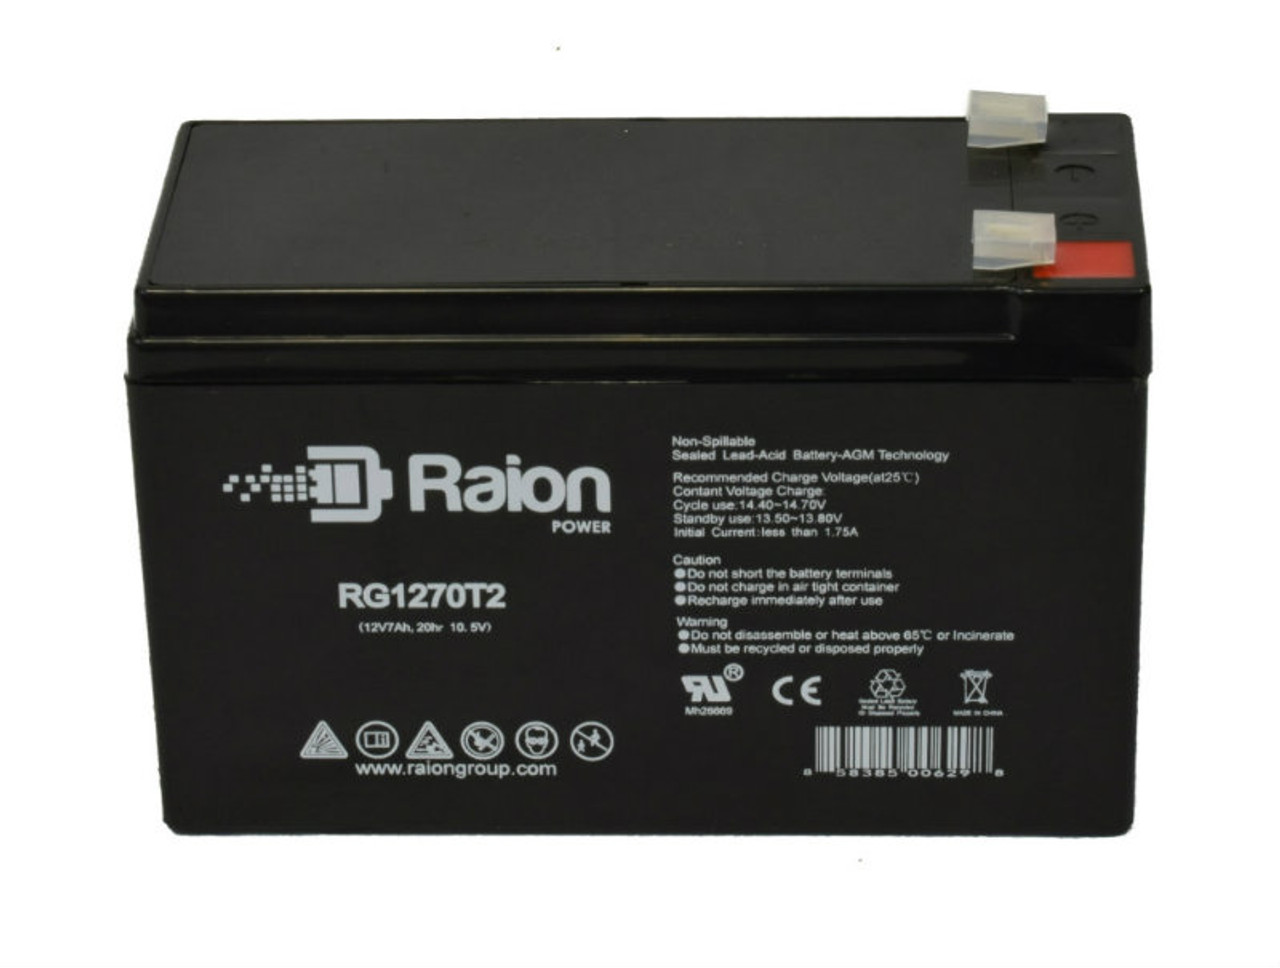 Raion Power RG1270T1 12V 7Ah Lead Acid Battery for ACME Security System 622